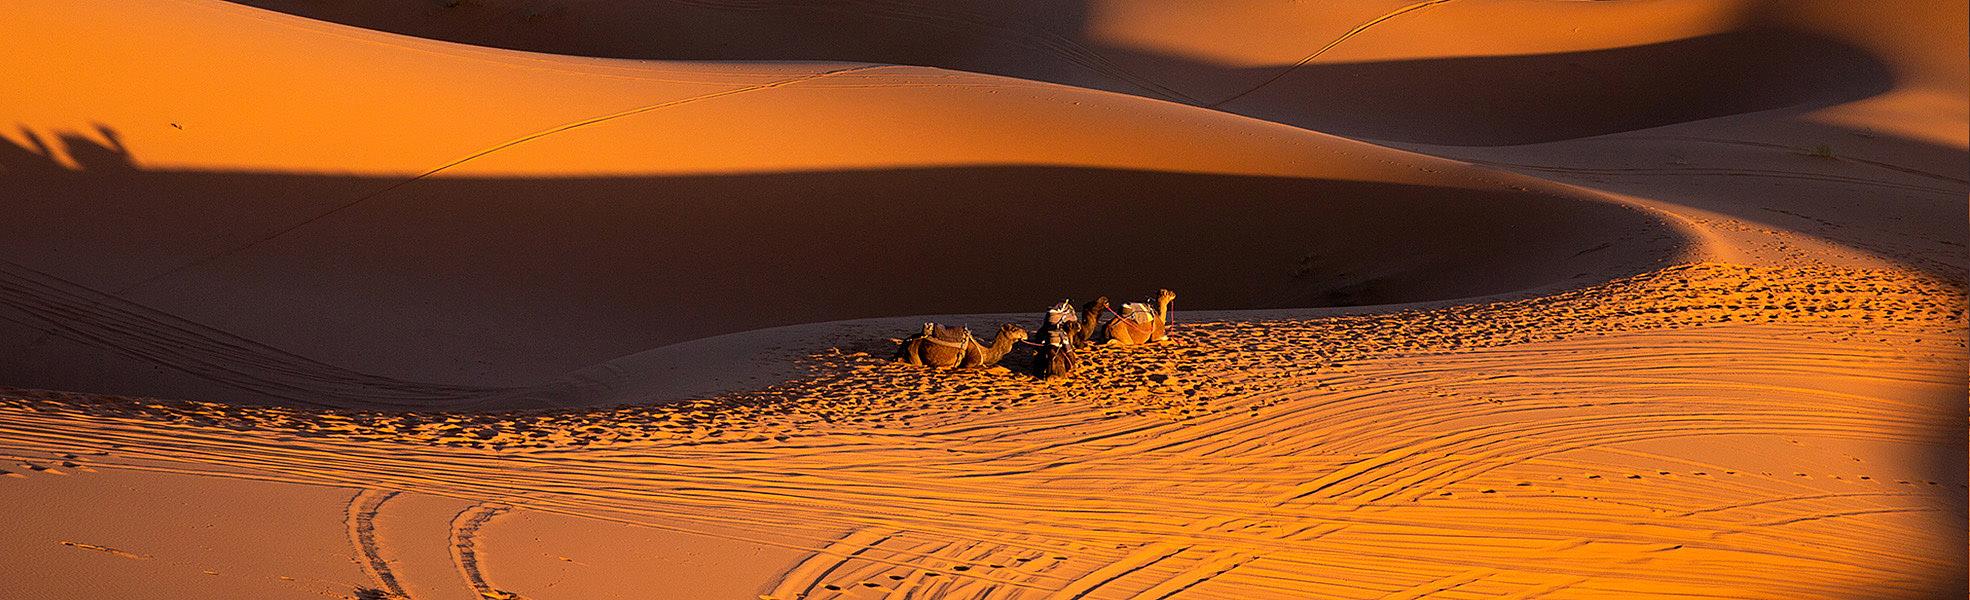 Sahara Desert 